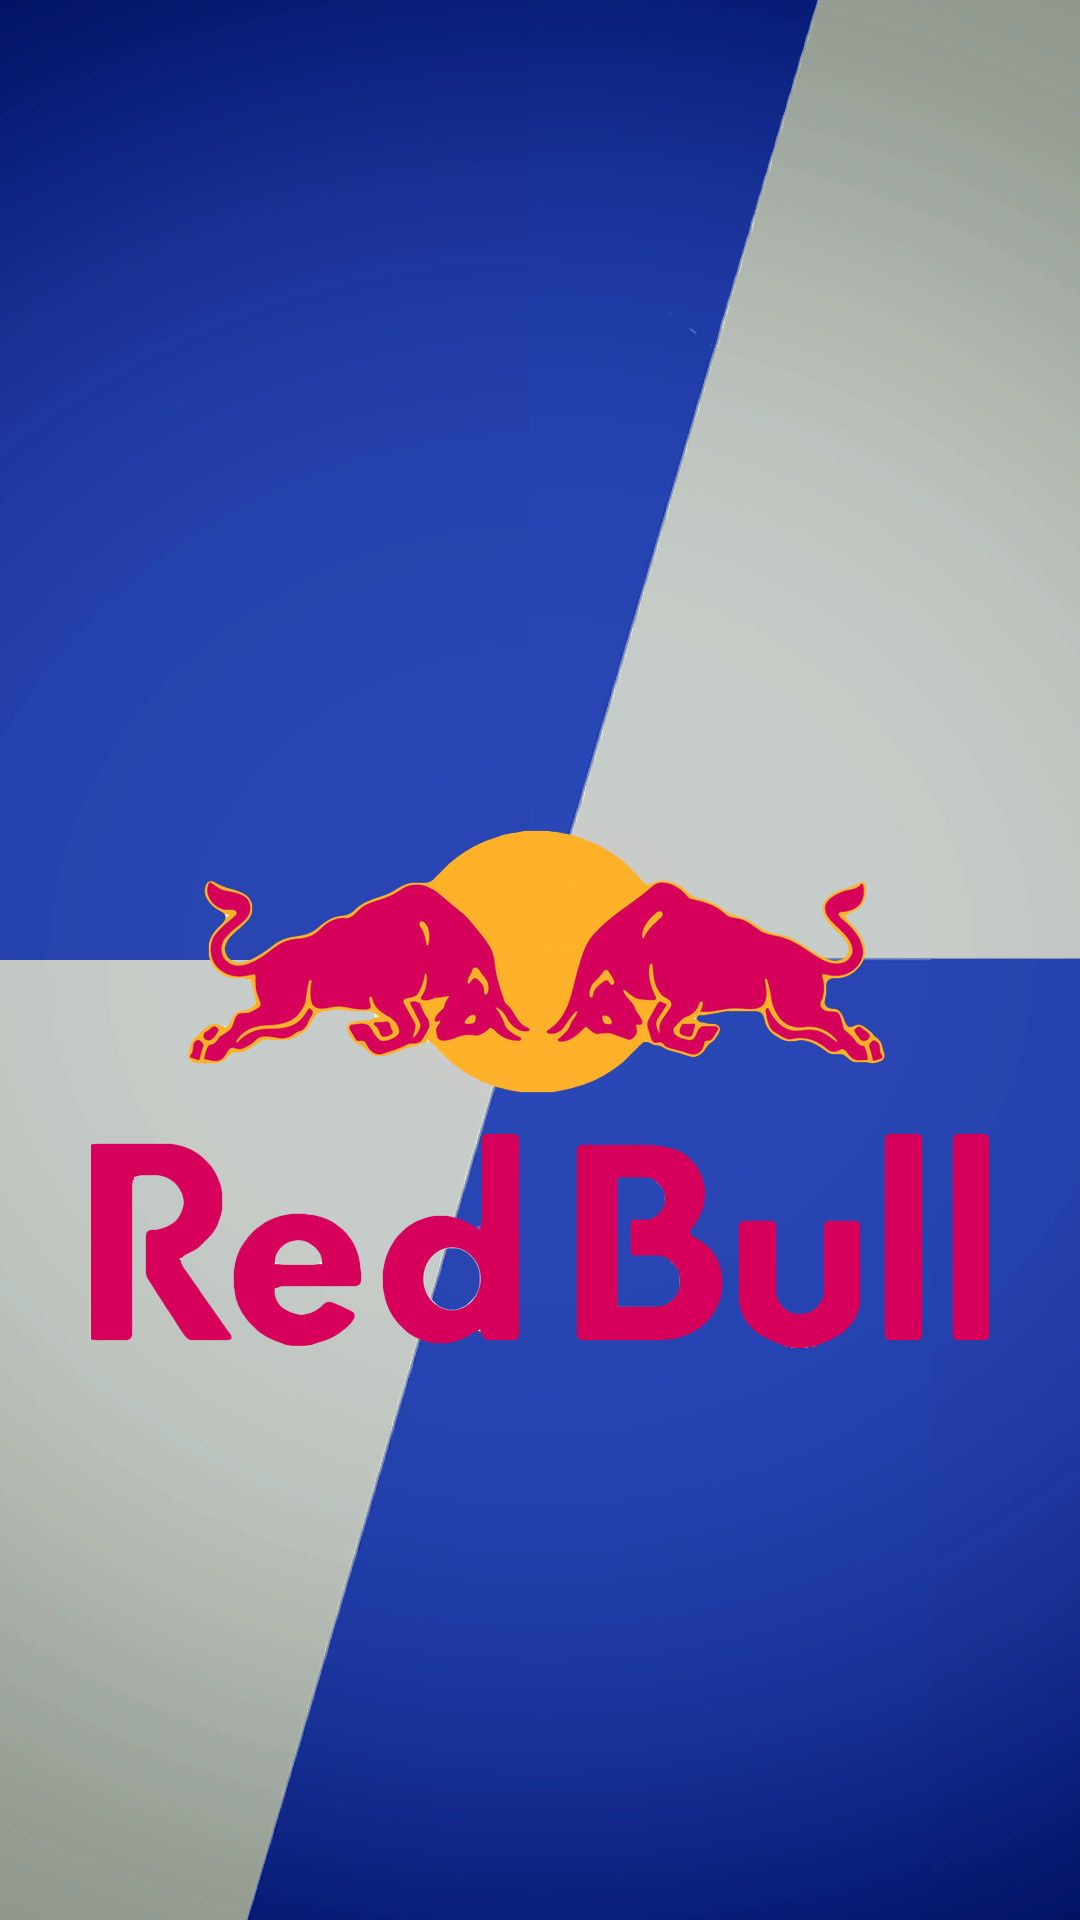 red bull iphone wallpaper,red,red bull,blue,logo,poster